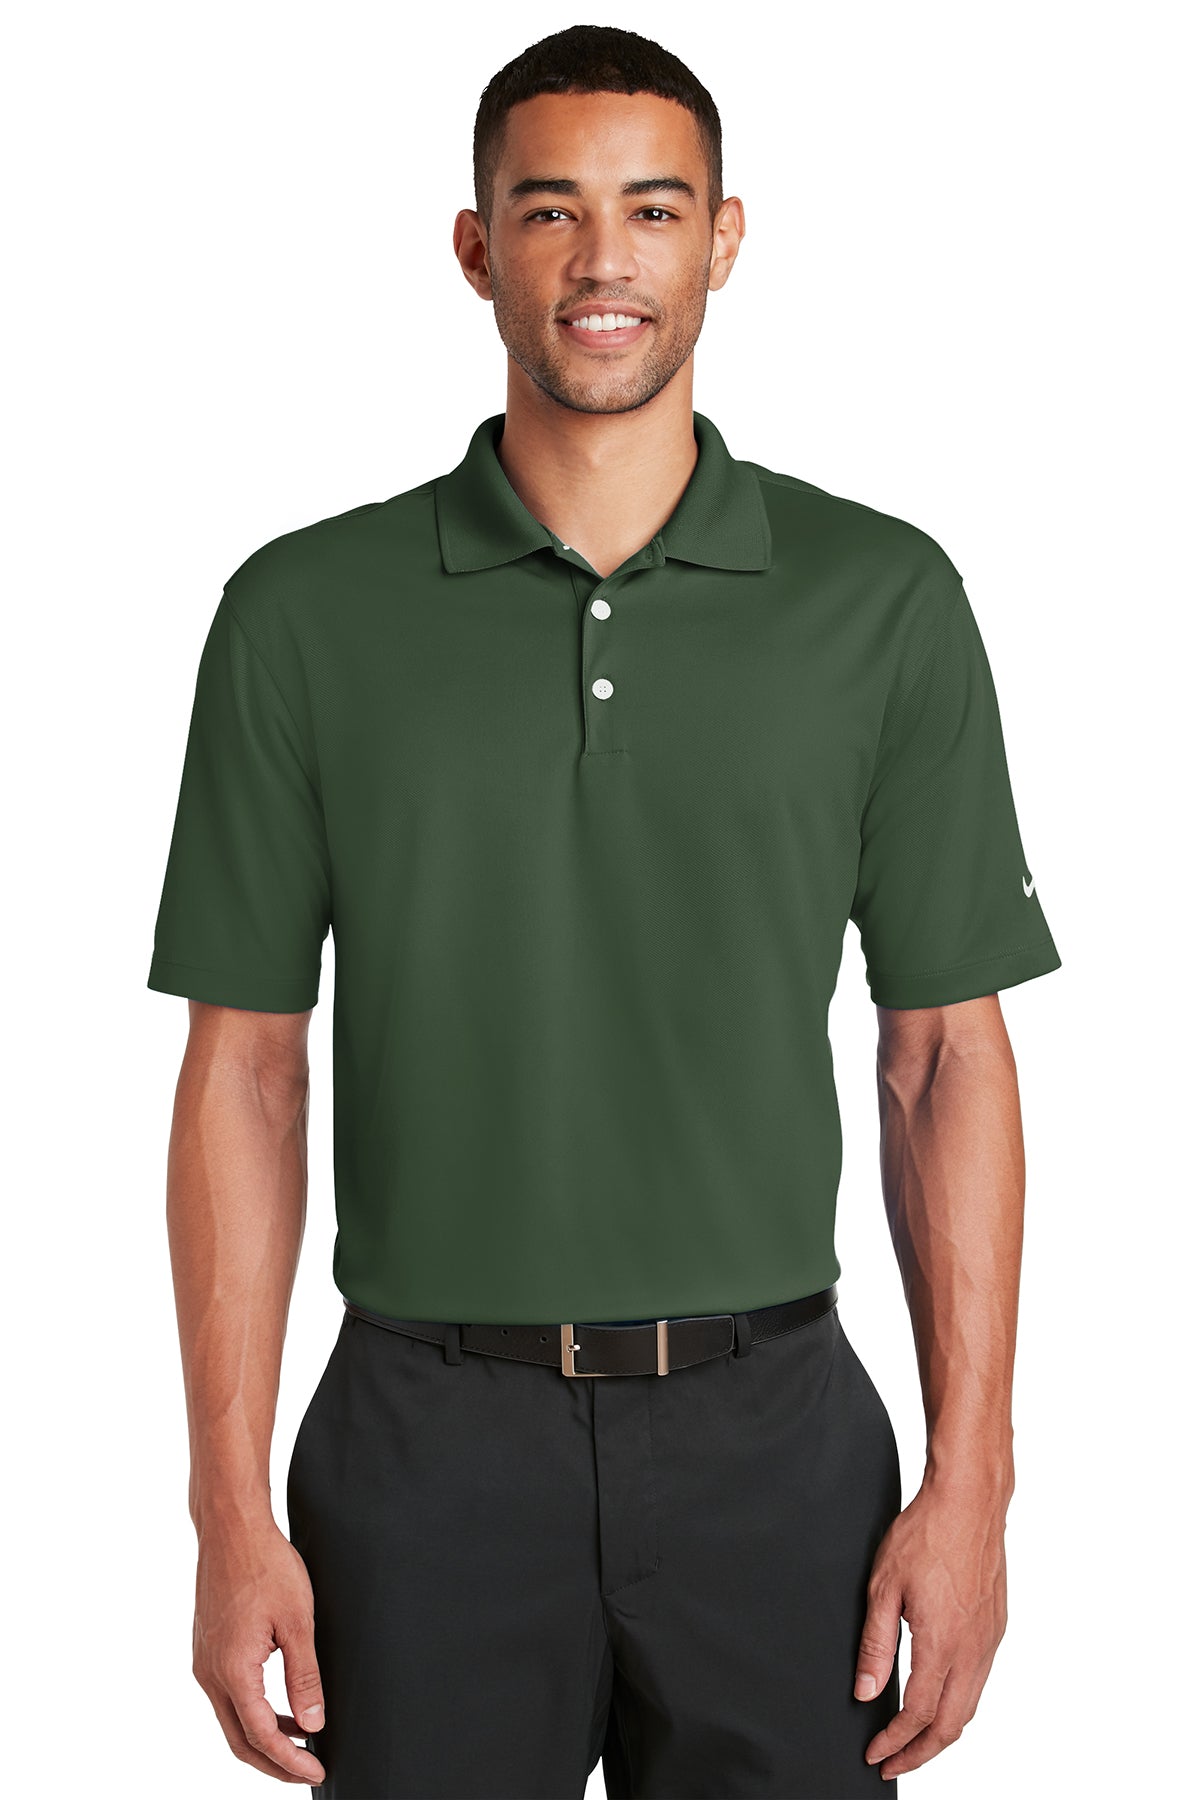 LL Sailboat (Embroidered) Nike Dri-Fit Golf Polo